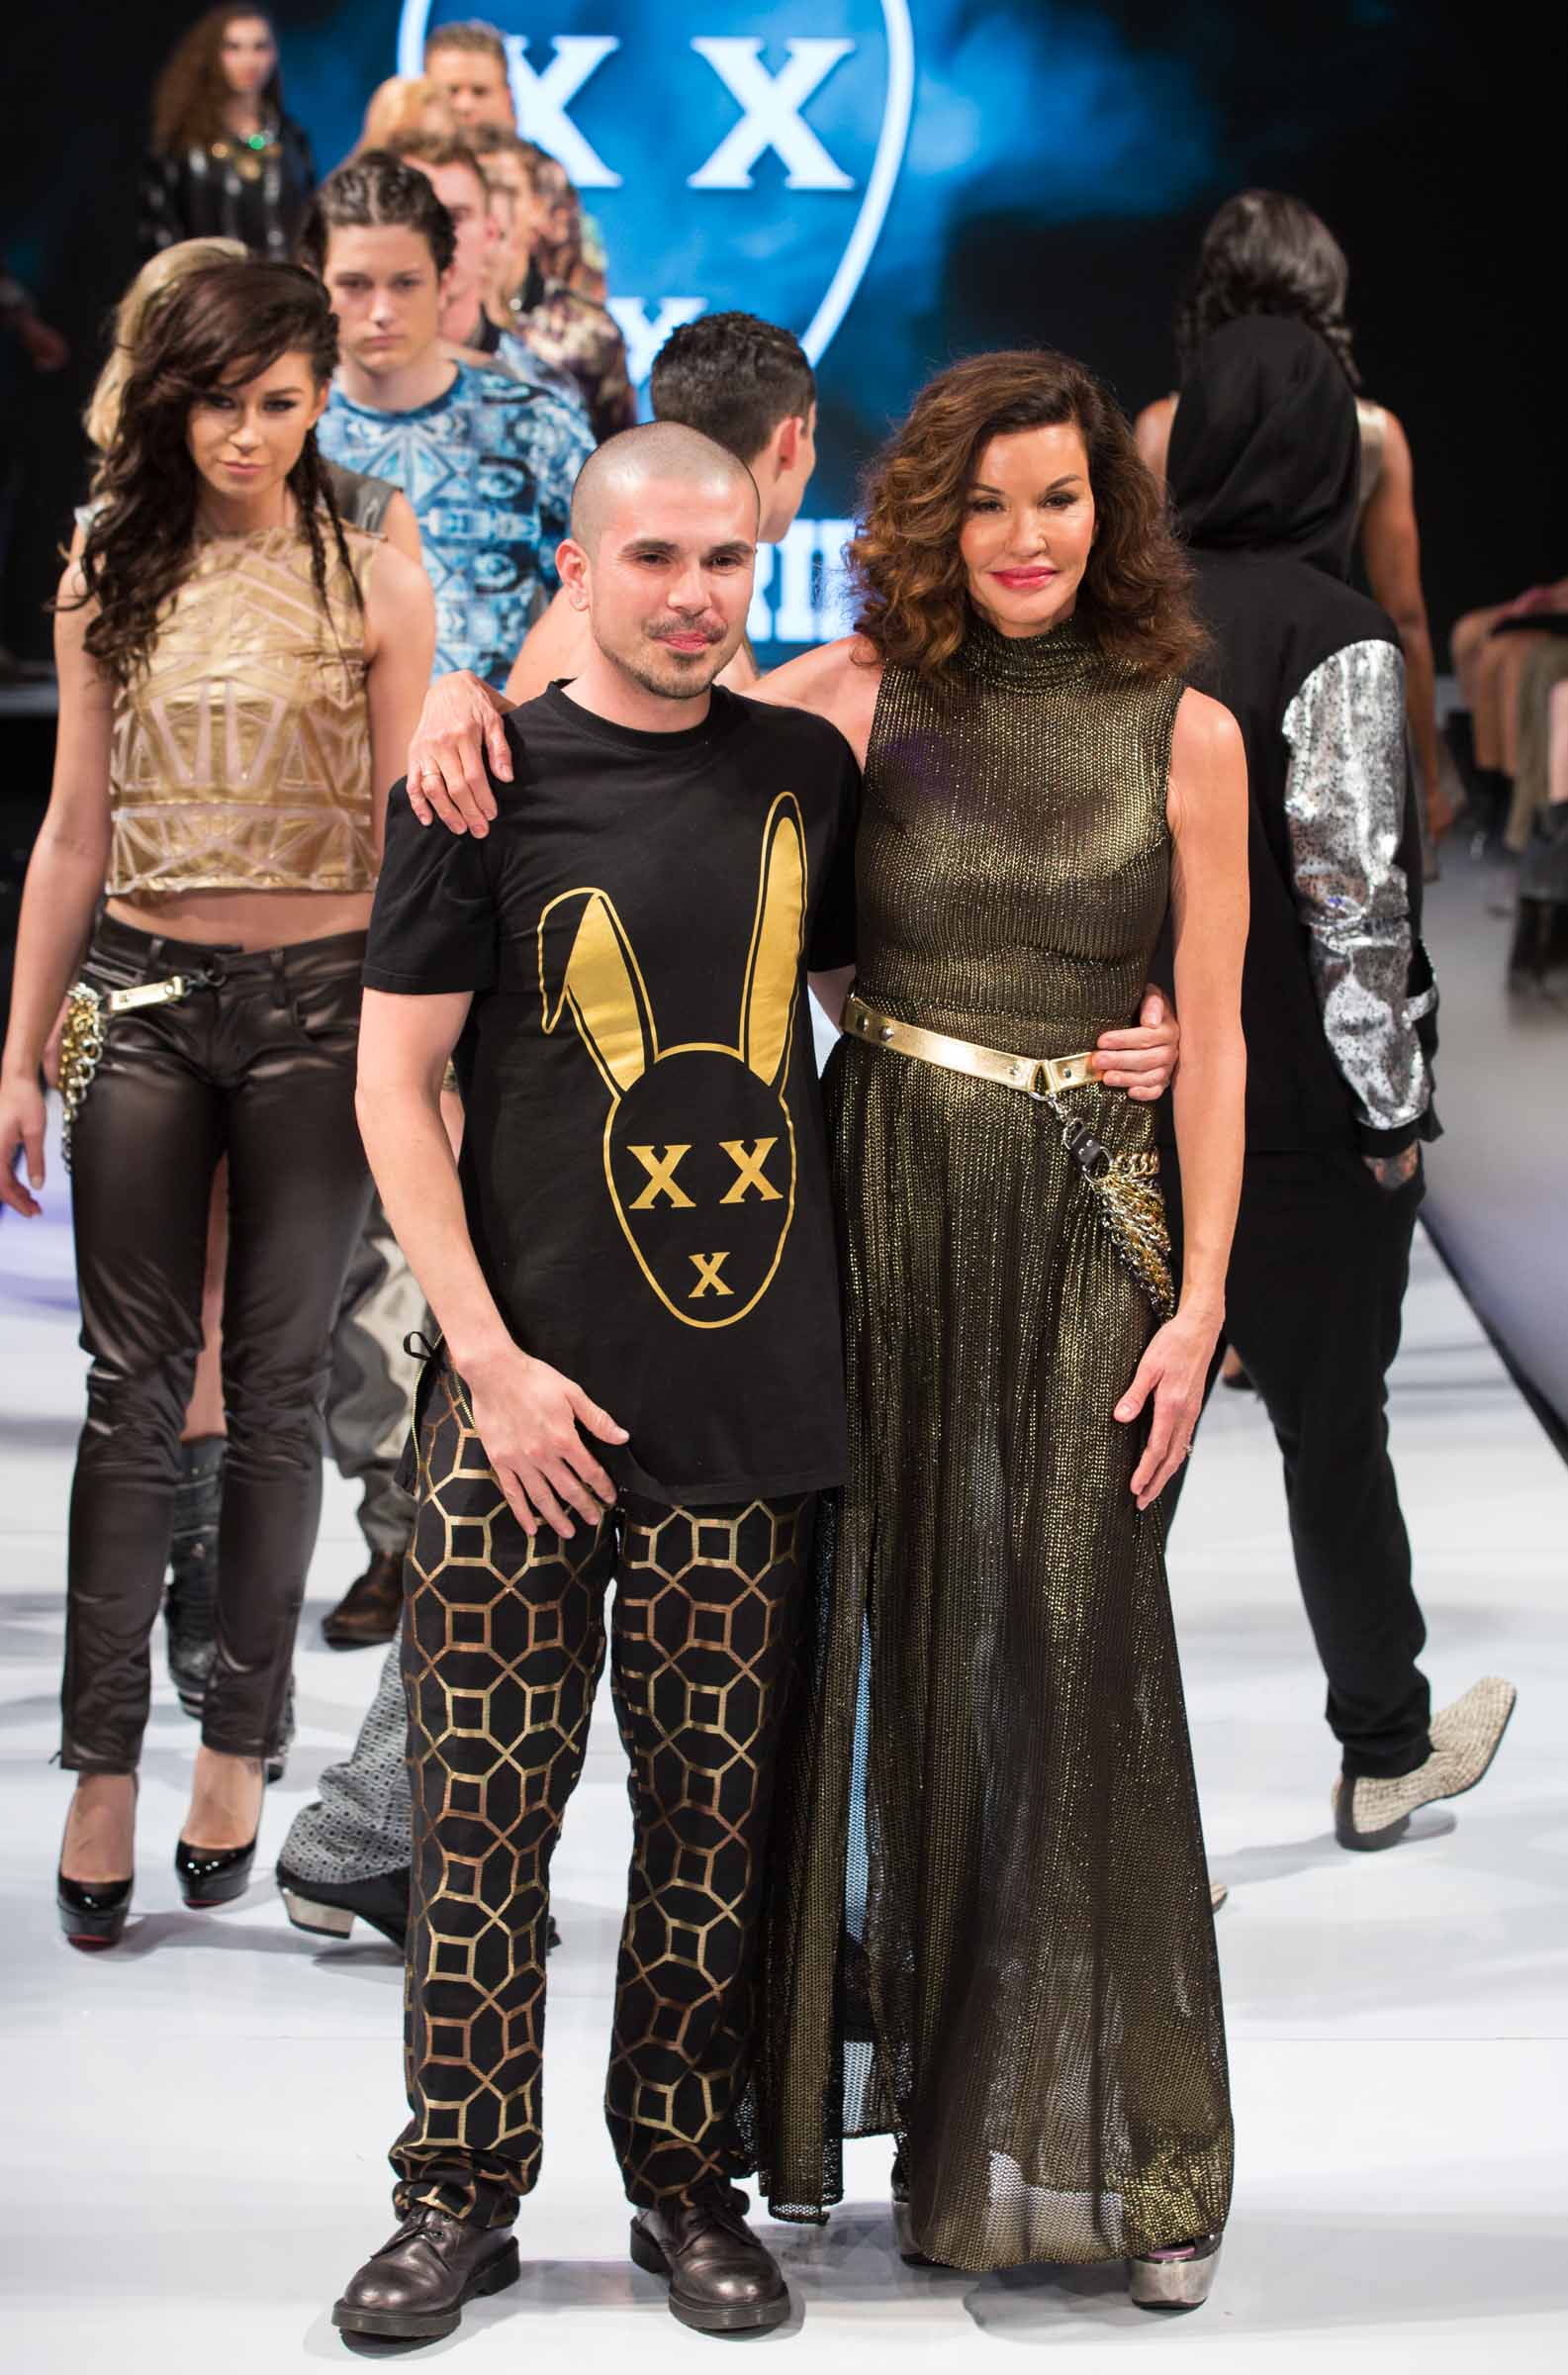 Mister Triple X Slays the Runway at Los Angeles Fashion Week